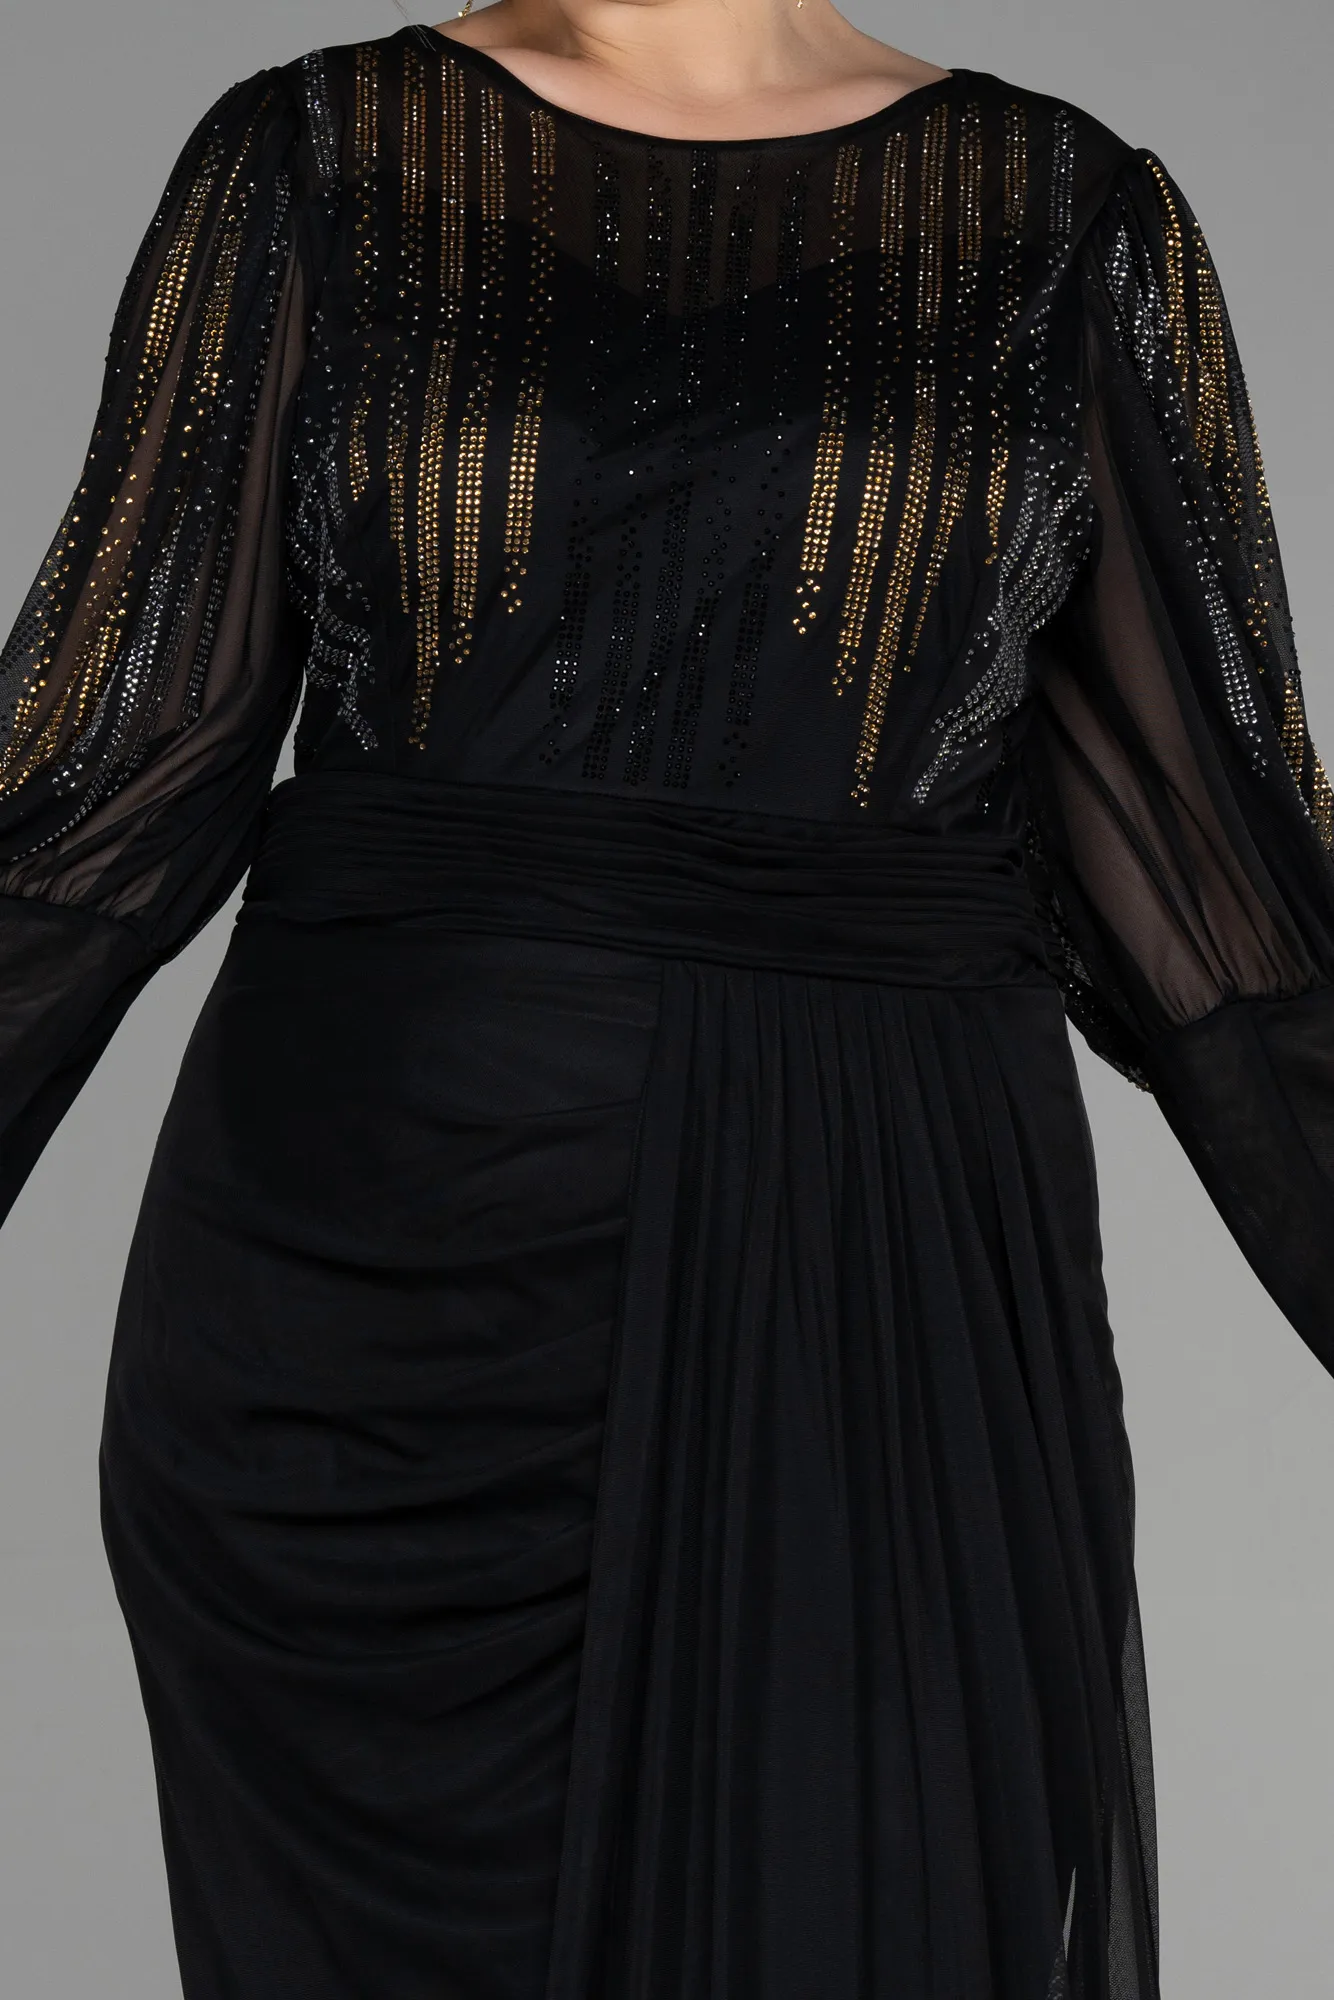 Black-Long Plus Size Evening Dress ABU3437